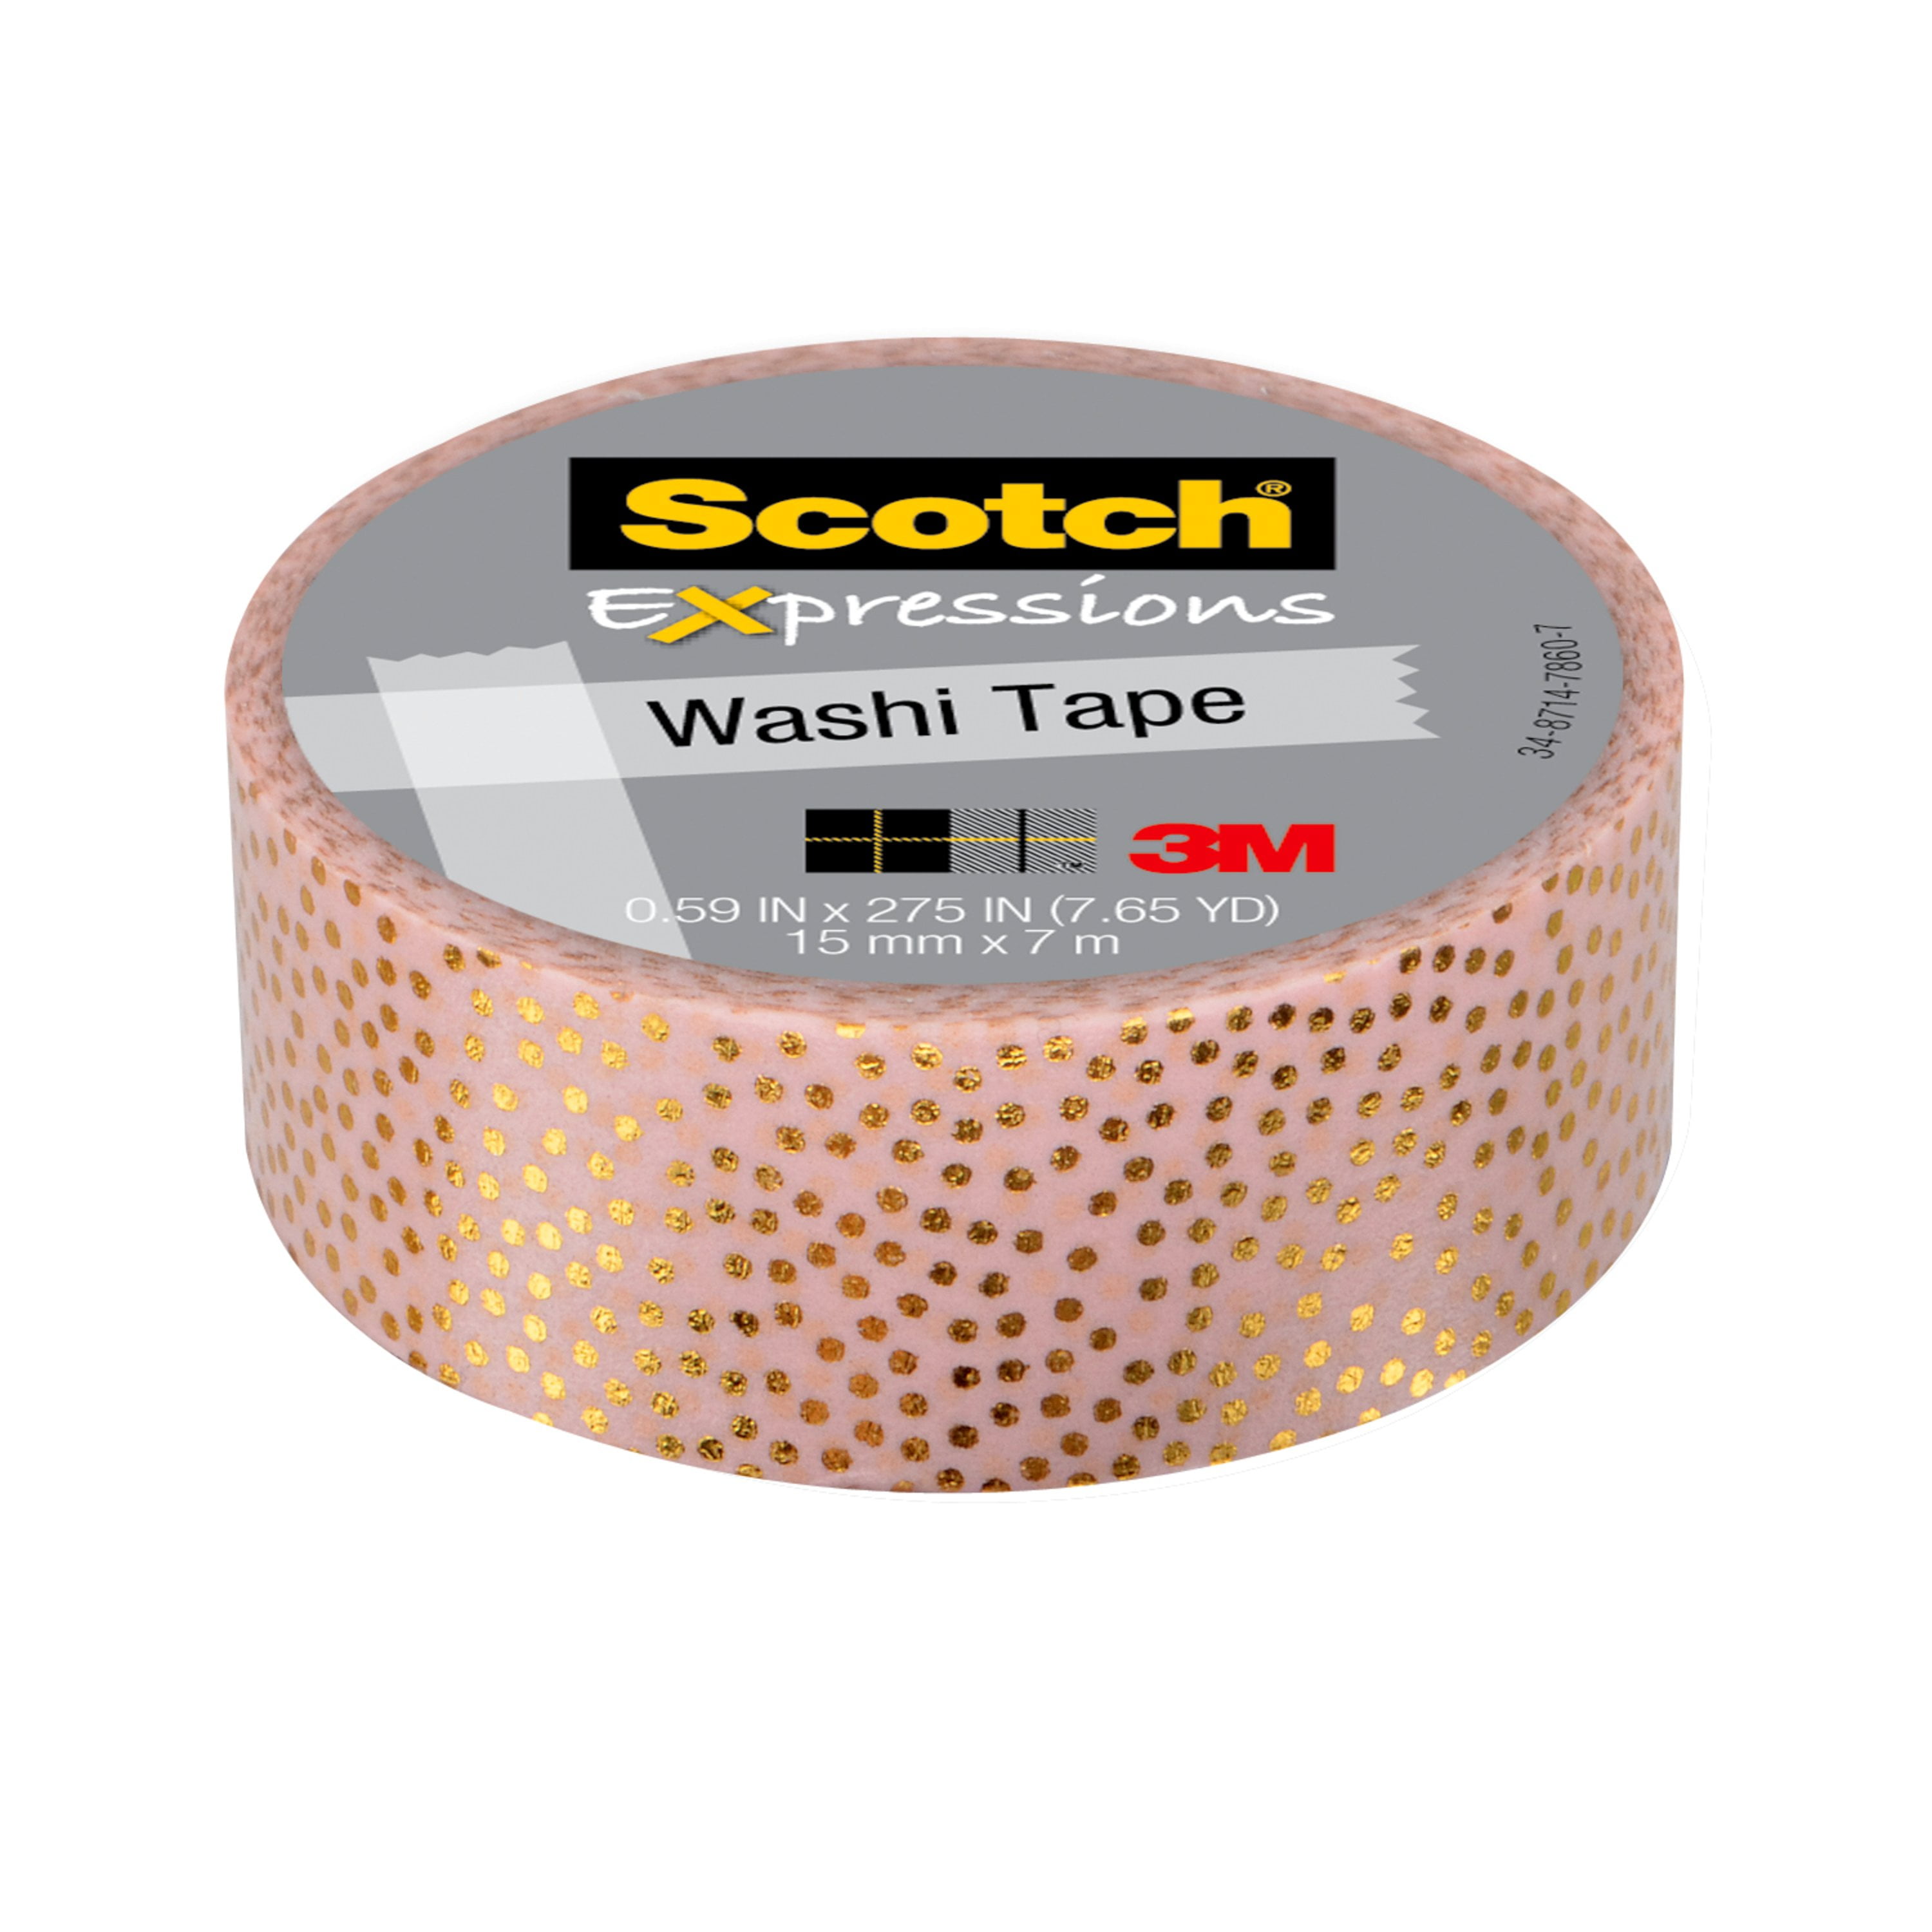 Gingham Polka Dot Decorative Masking Washi Tape - Pink - A